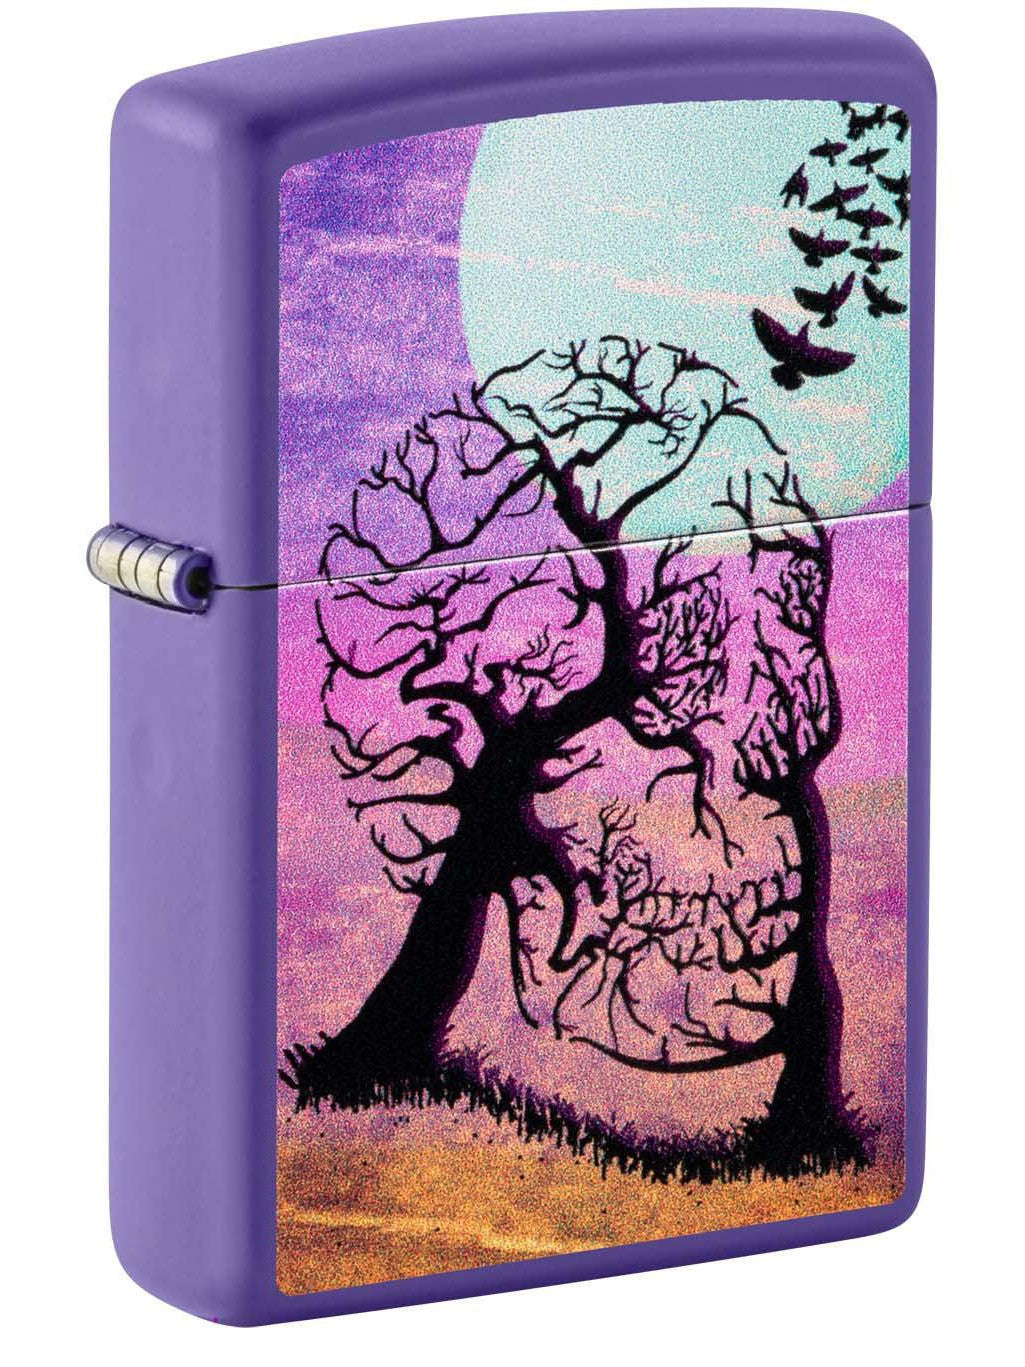 Zippo Lighter: Skull and Tree with Birds - Purple Matte 48638